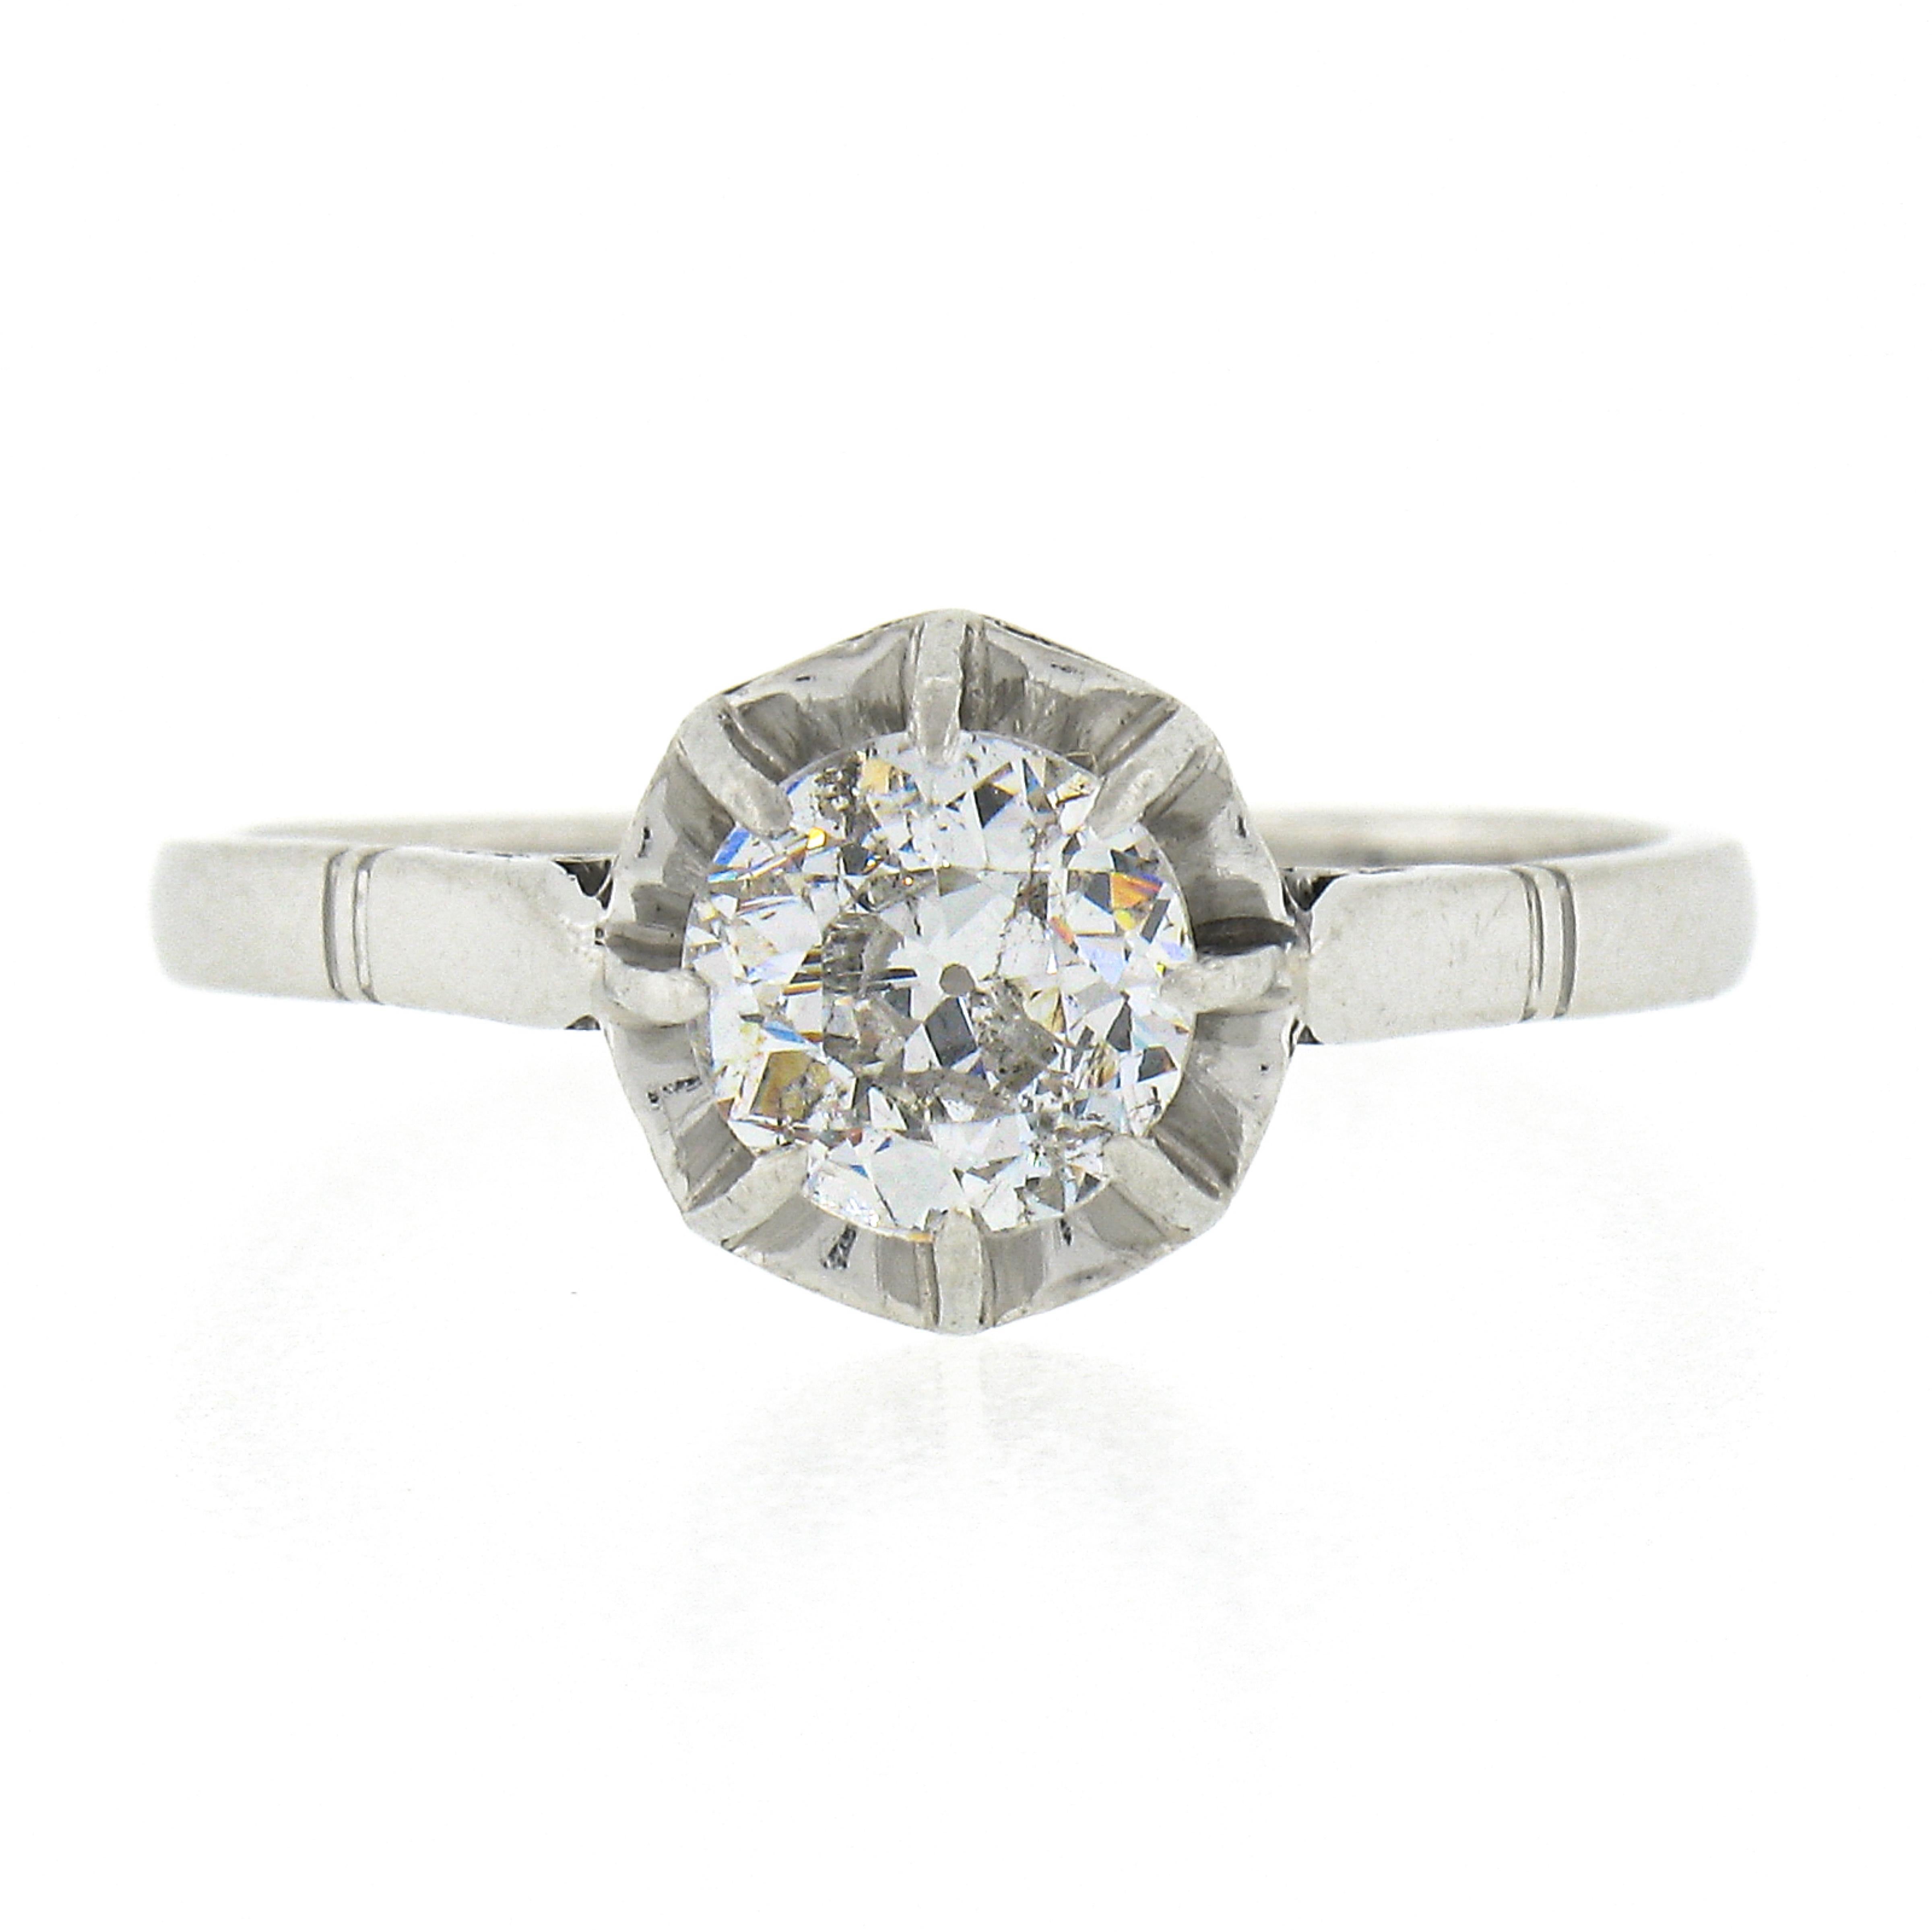 Antique Art Deco French Platinum Illusion Set Diamond Solitaire Engagement Ring For Sale